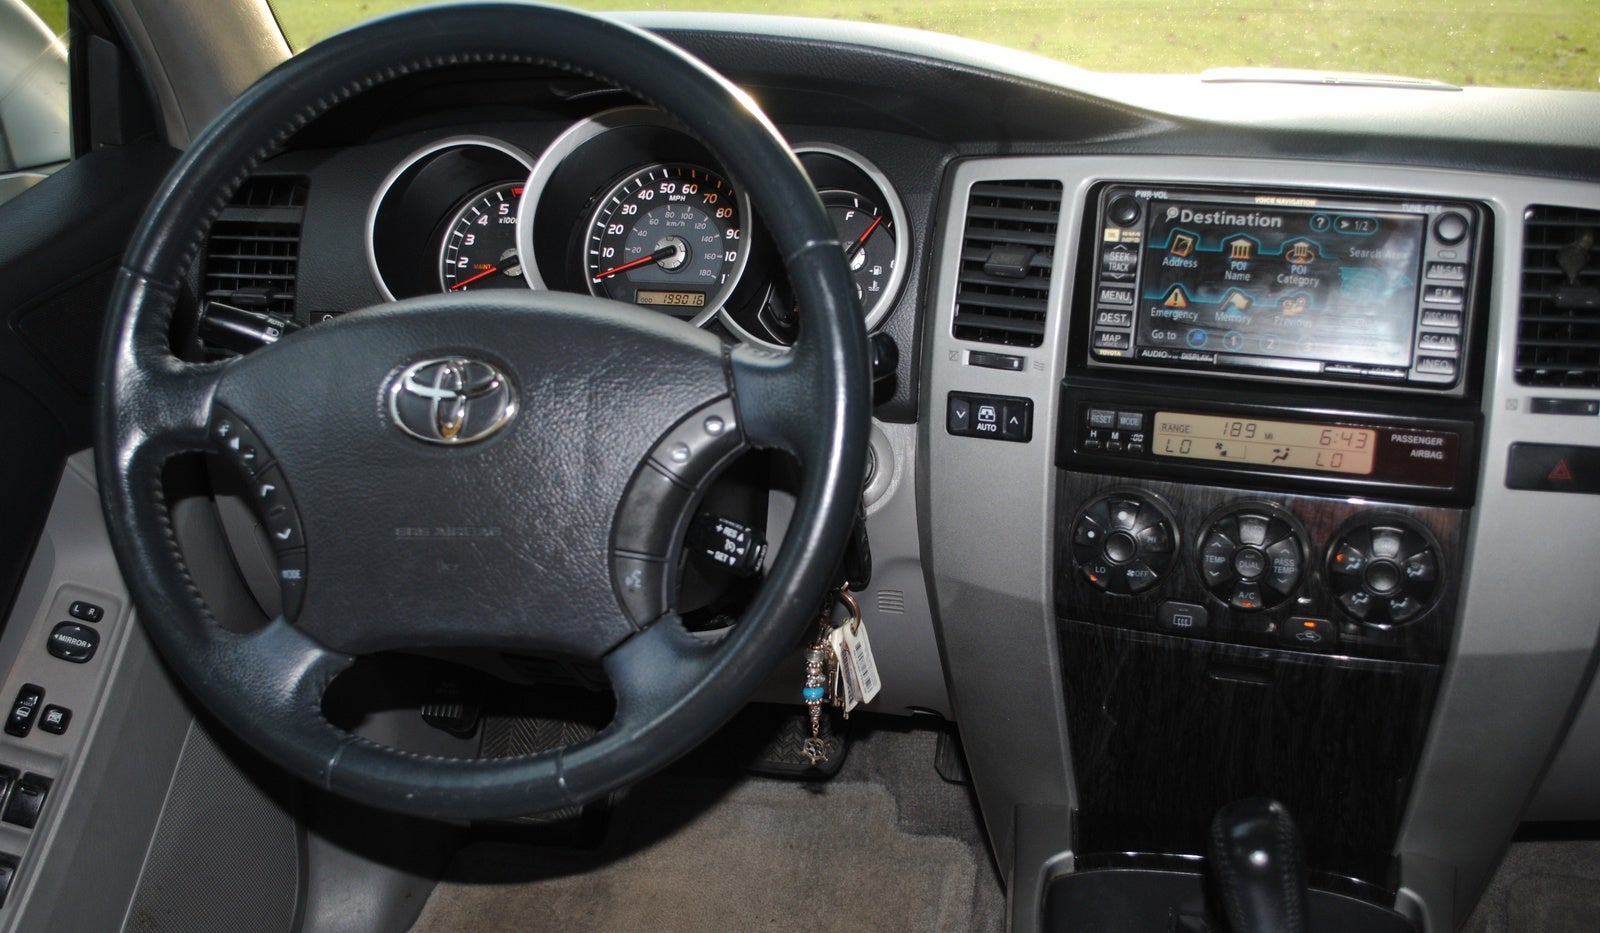 2006 Toyota 4runner interior photos